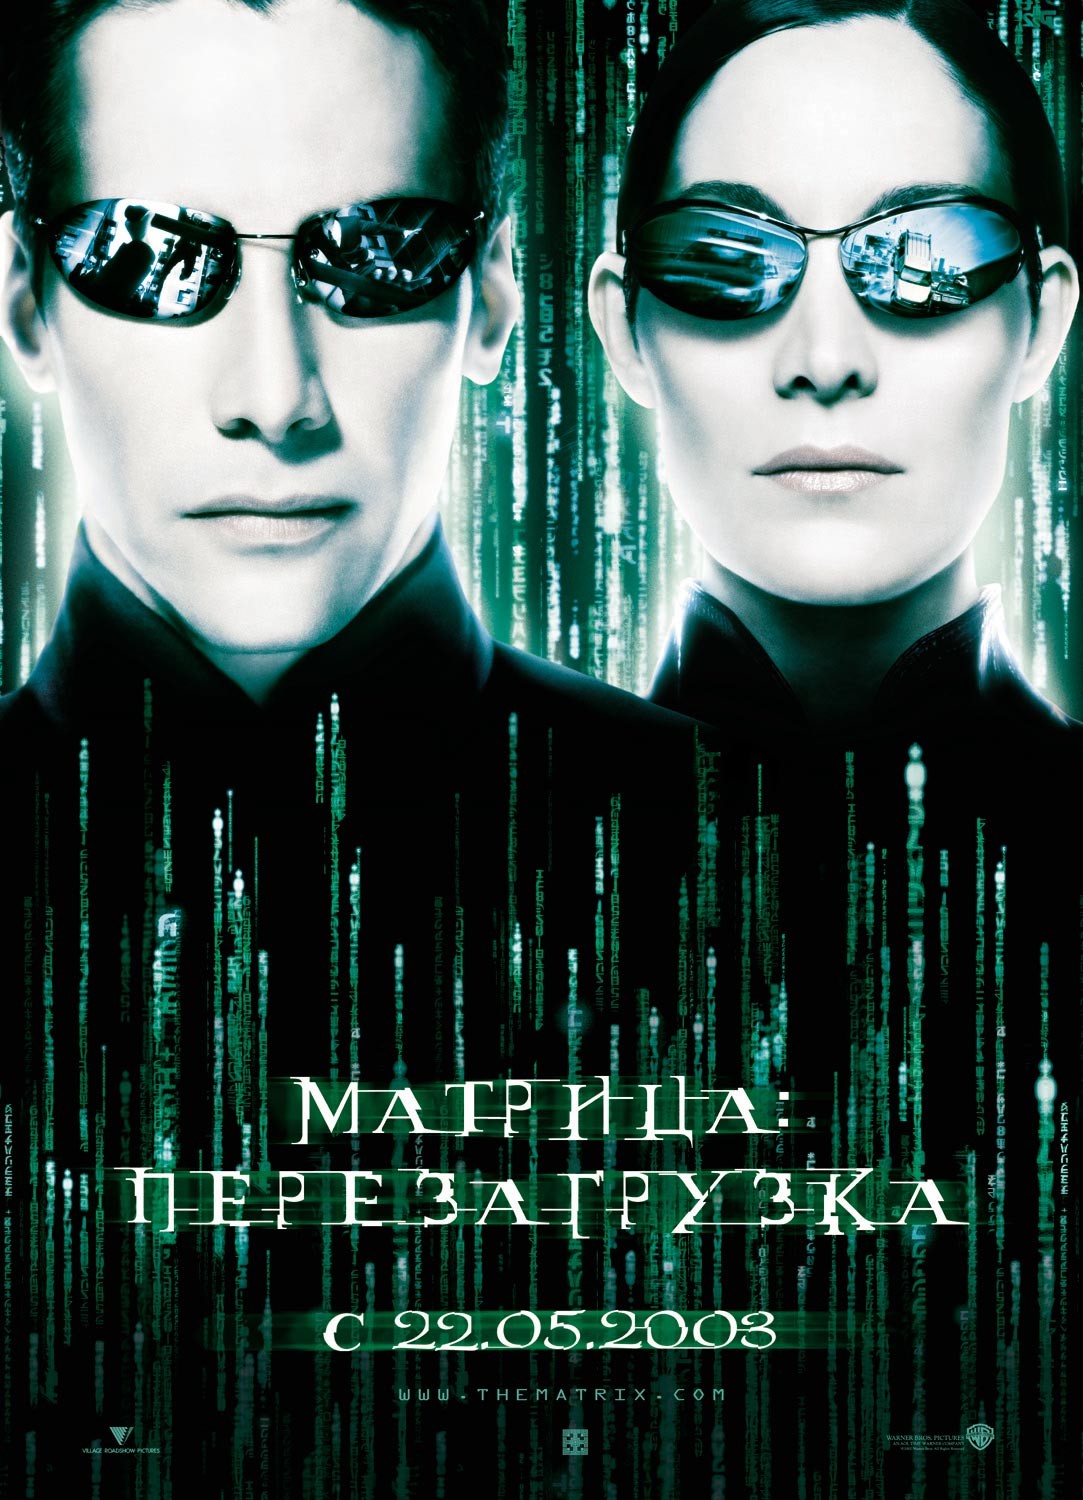 Смотреть кино онлайн Матрица 2: Перезагрузка/The Matrix 2: Reloaded